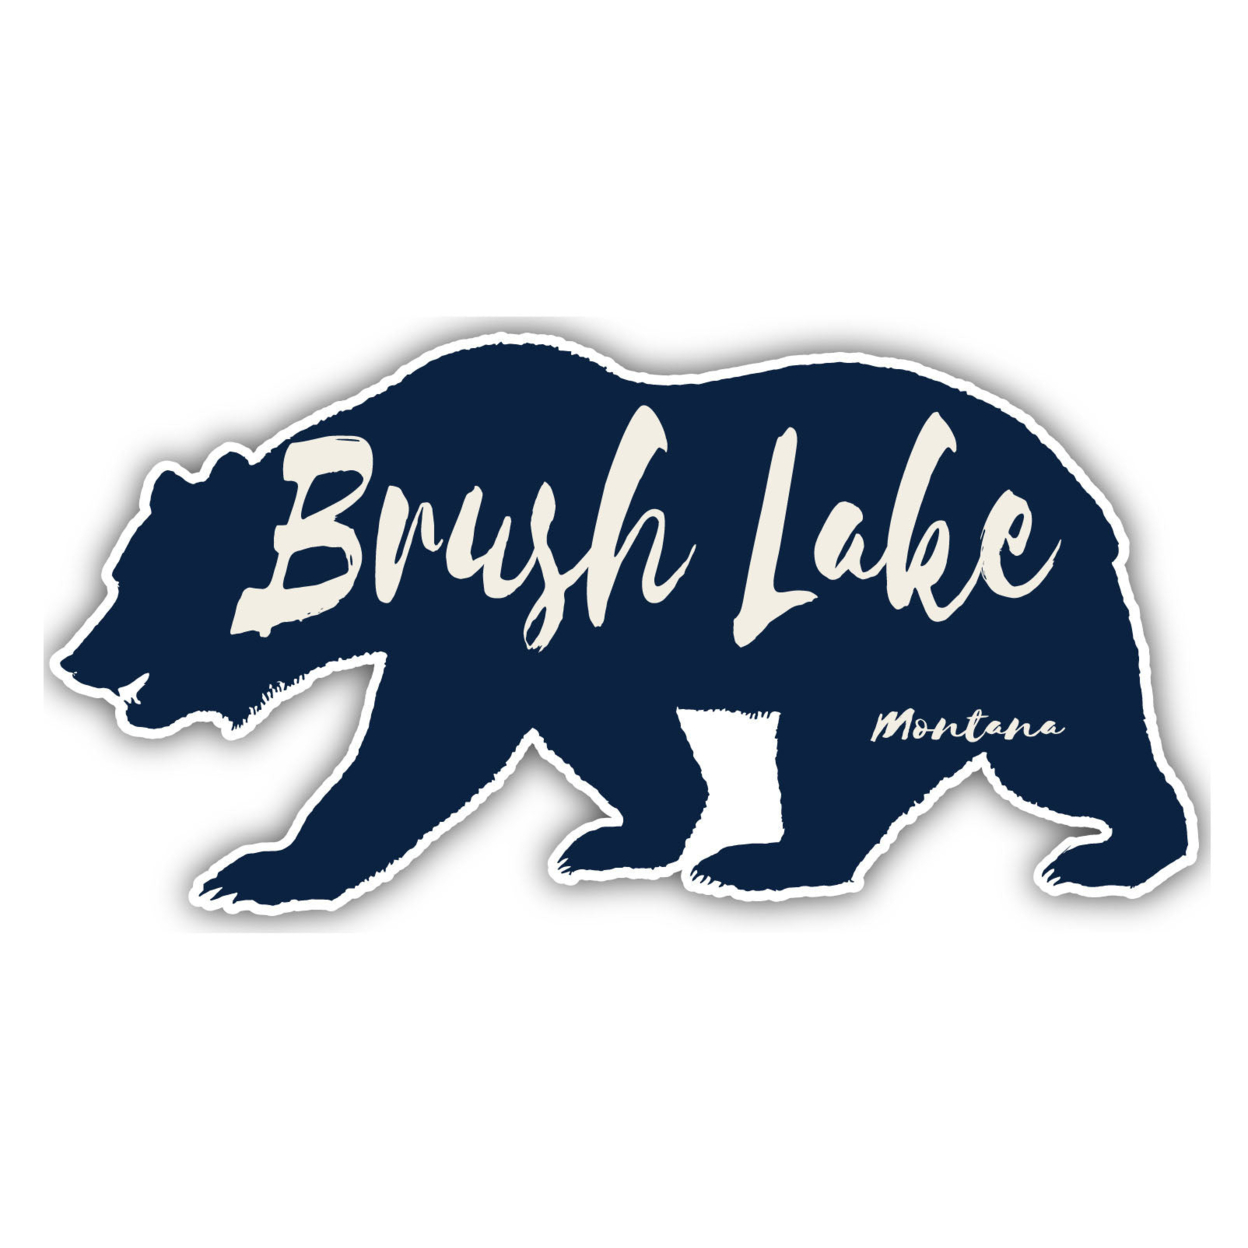 Brush Lake Montana Souvenir Decorative Stickers (Choose Theme And Size) - 4-Pack, 2-Inch, Bear